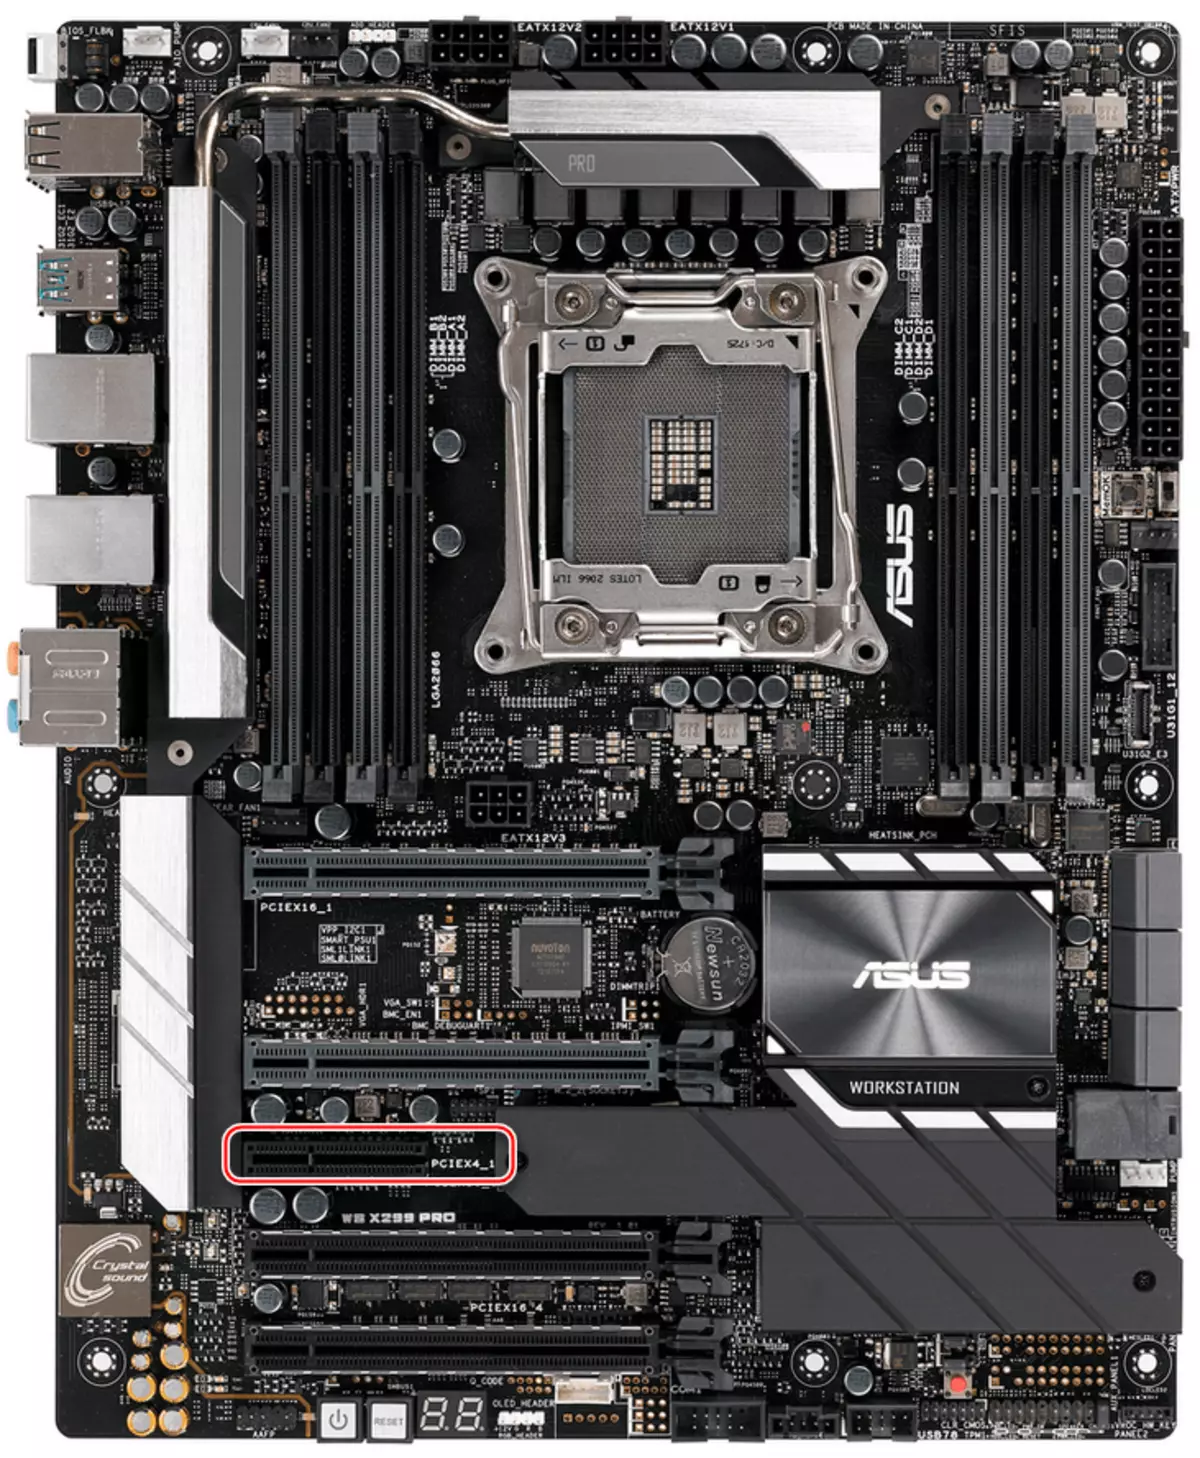 PCI Express x4 slot li ser motherboard